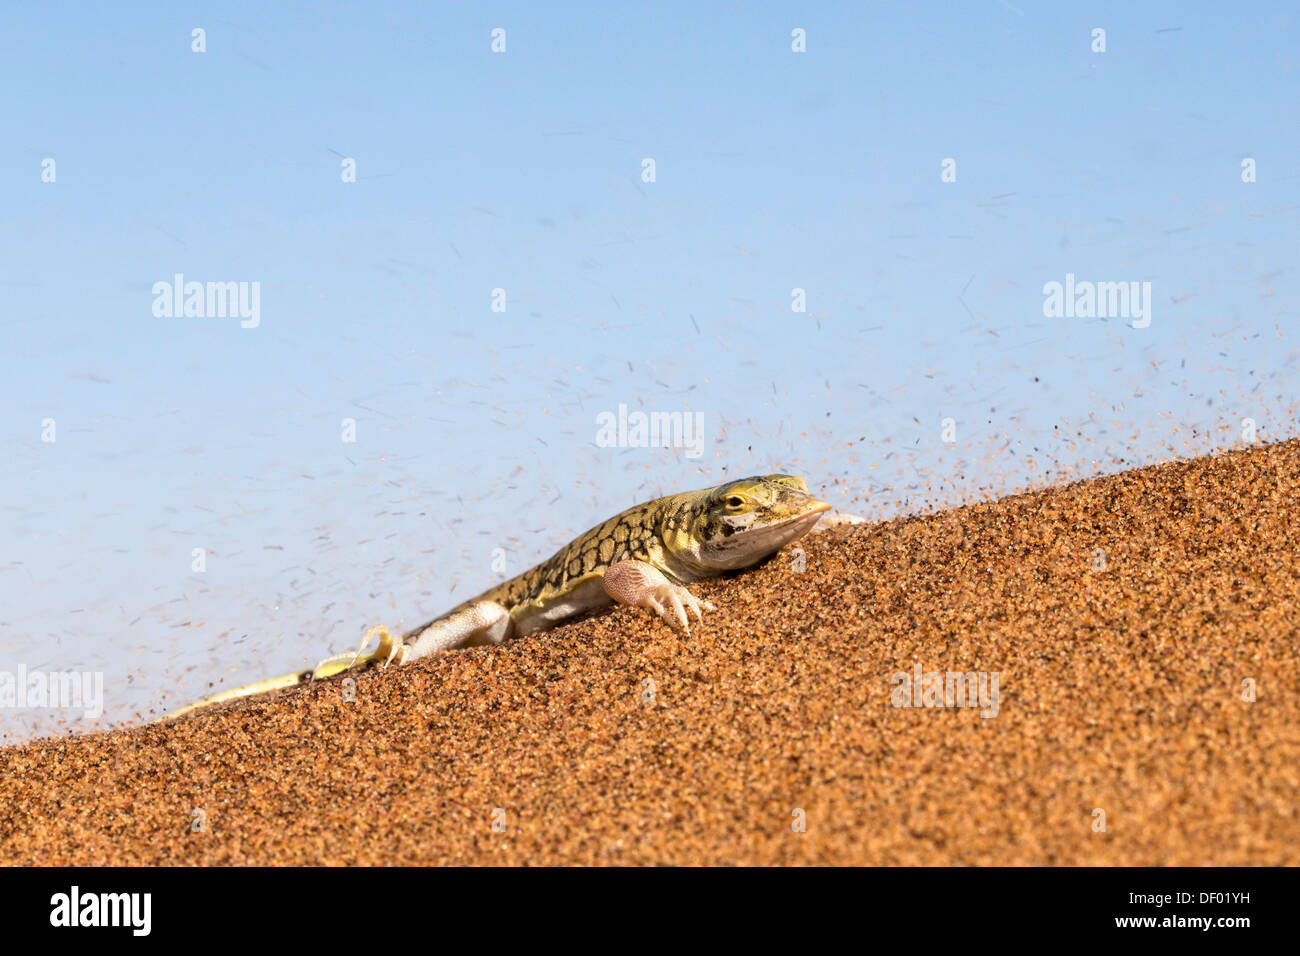 Shovel-snouted lizard (Meroles anchietae), Namib Desert, Namibia, April 2013 cropped Stock Photo